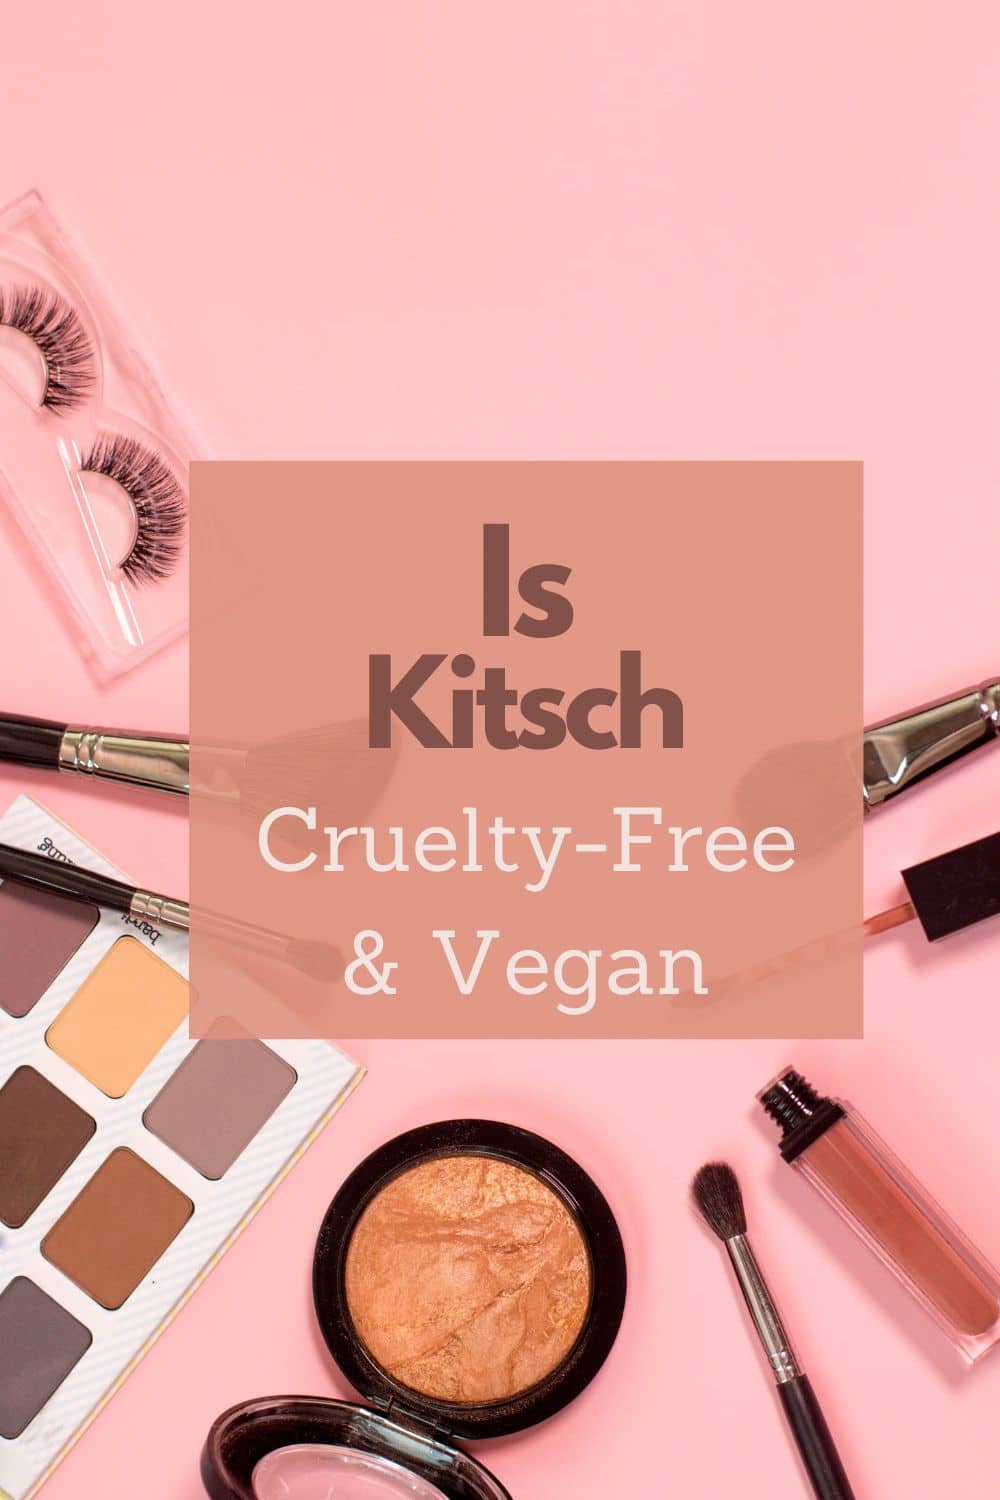 Is Kitsch Vegan and Cruelty-Free?